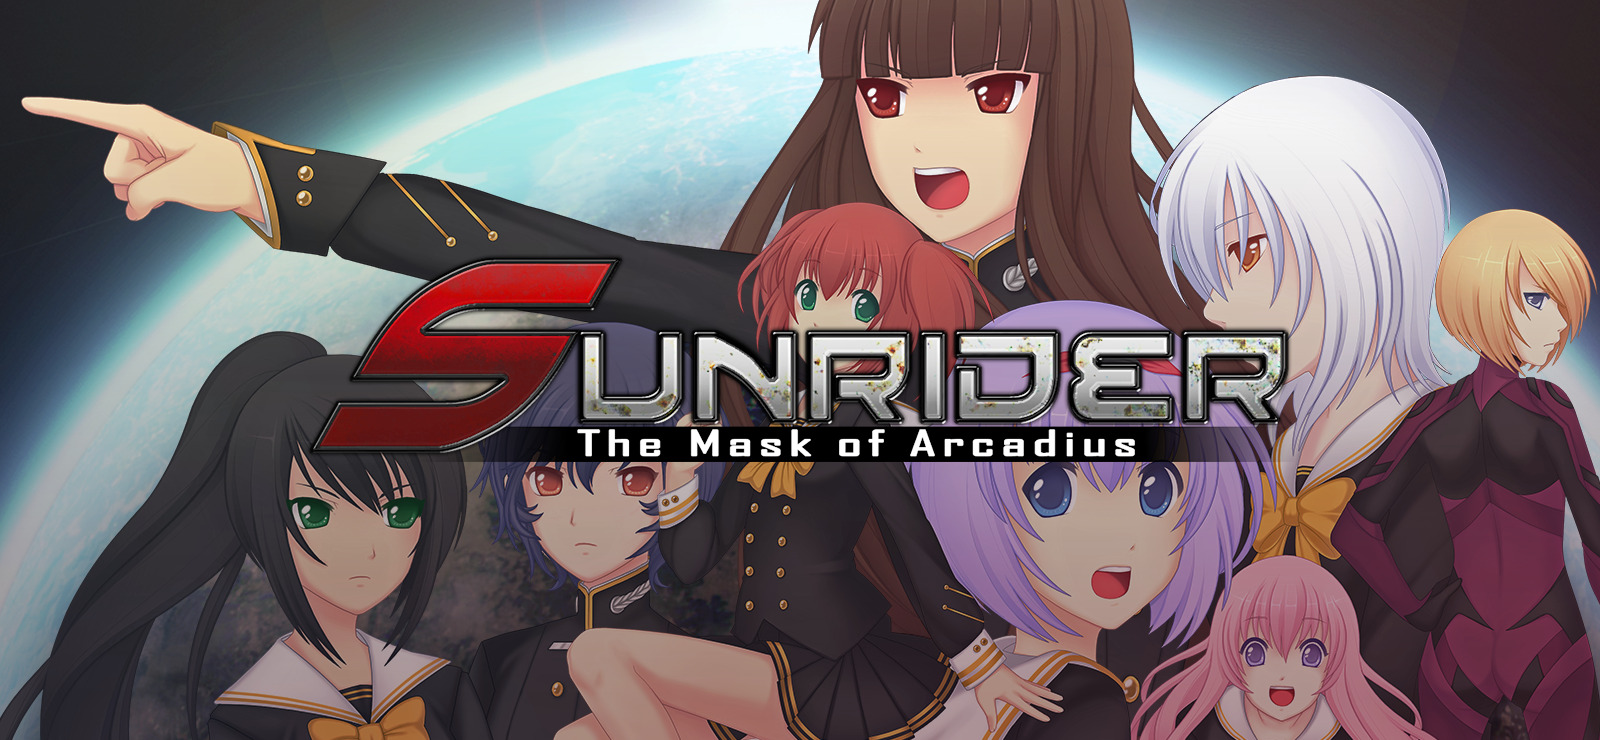 Sunrider - The Mask of Arcadius